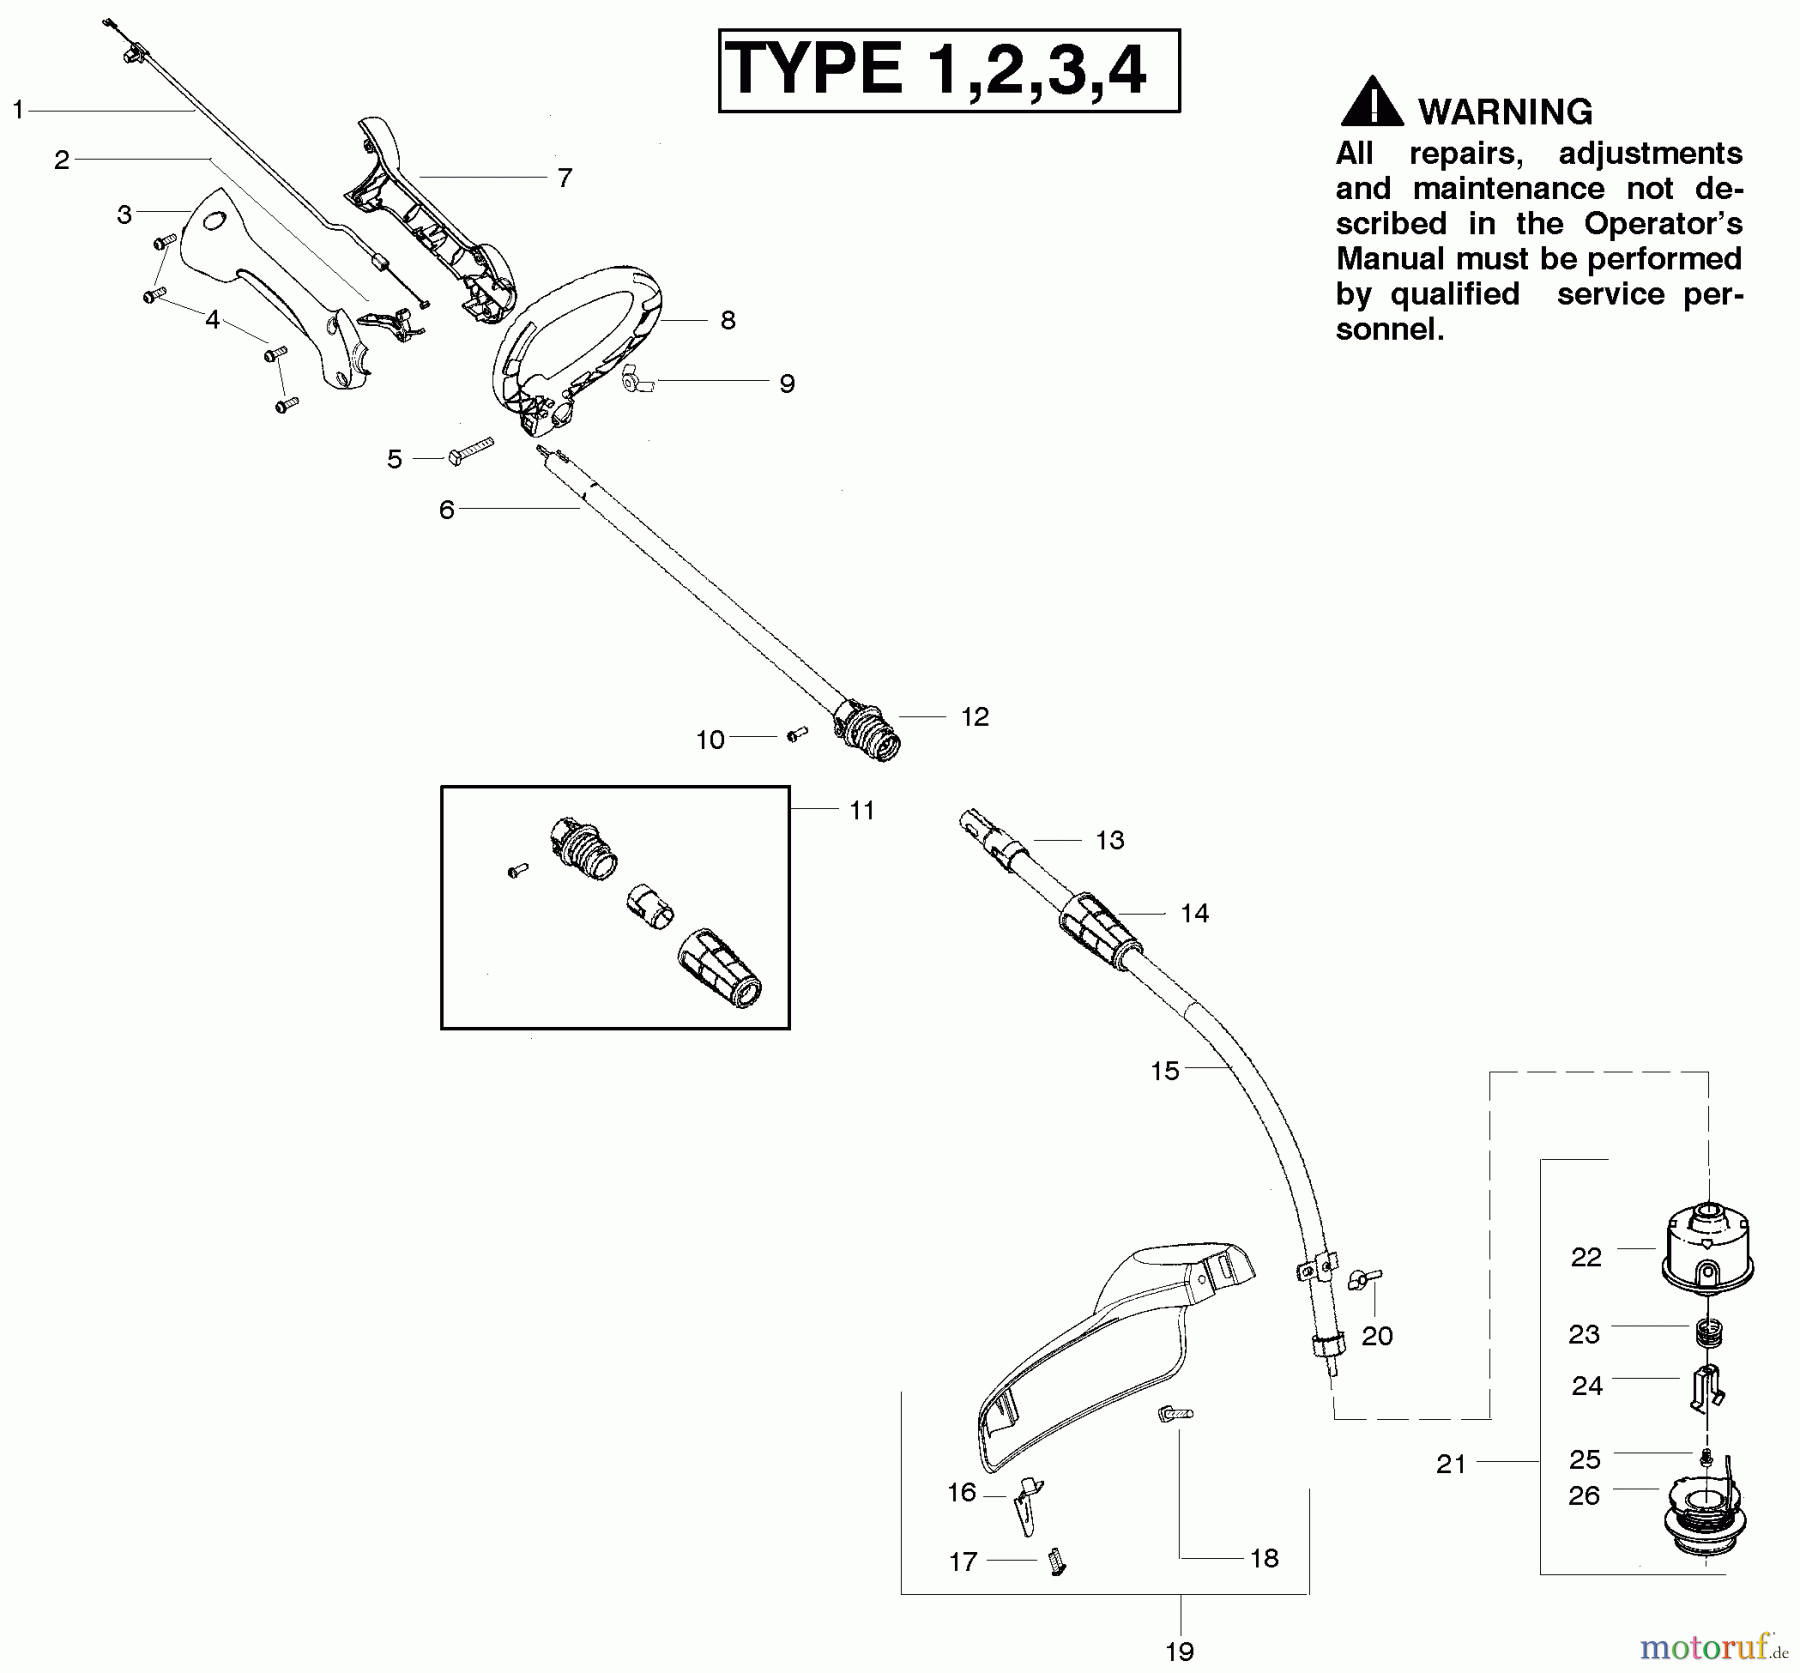  Poulan / Weed Eater Motorsensen, Trimmer FL20C (Type 4) - Weed Eater Featherlite String Trimmer Cutting Equipment Type 1,2,3,4